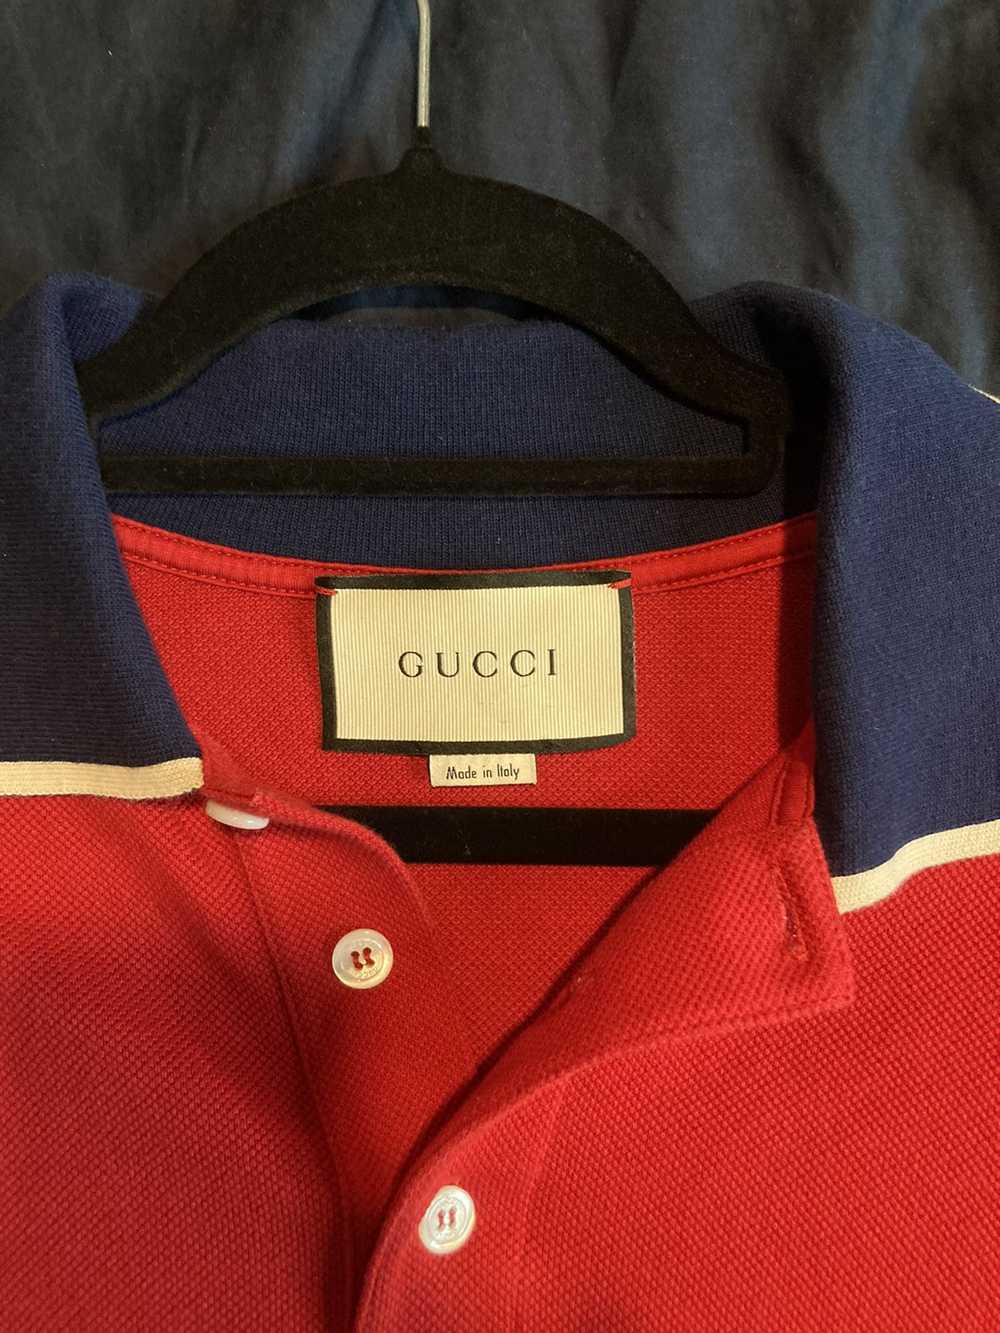 Gucci Gucci Cotton Piquet Polo with Web Collar - image 7